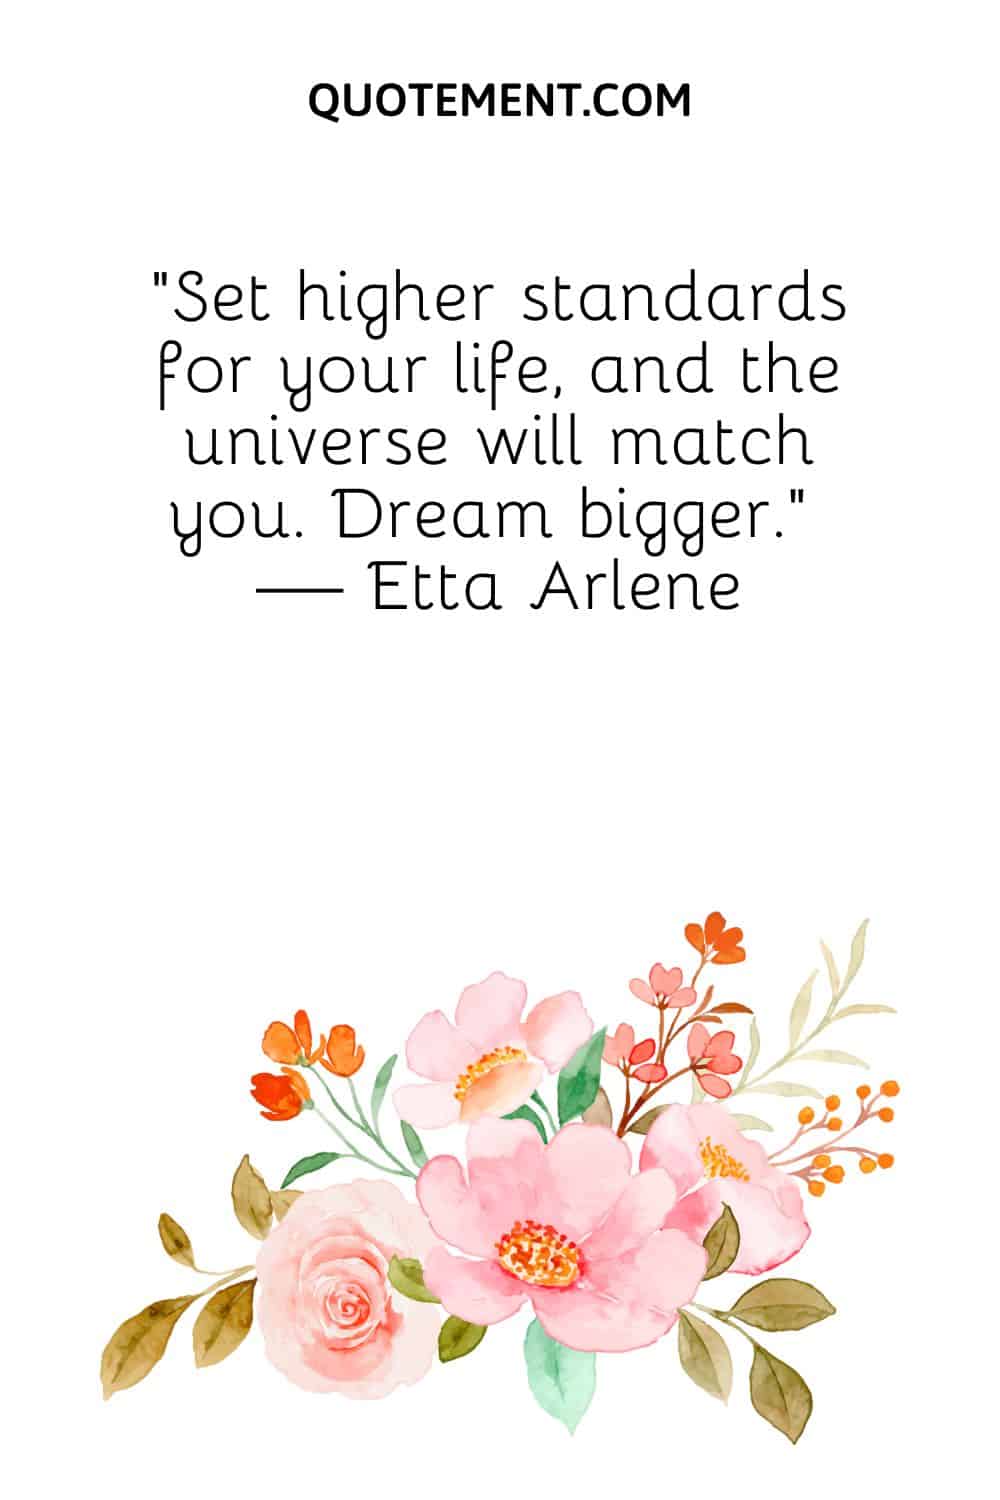 Set higher standards for your life